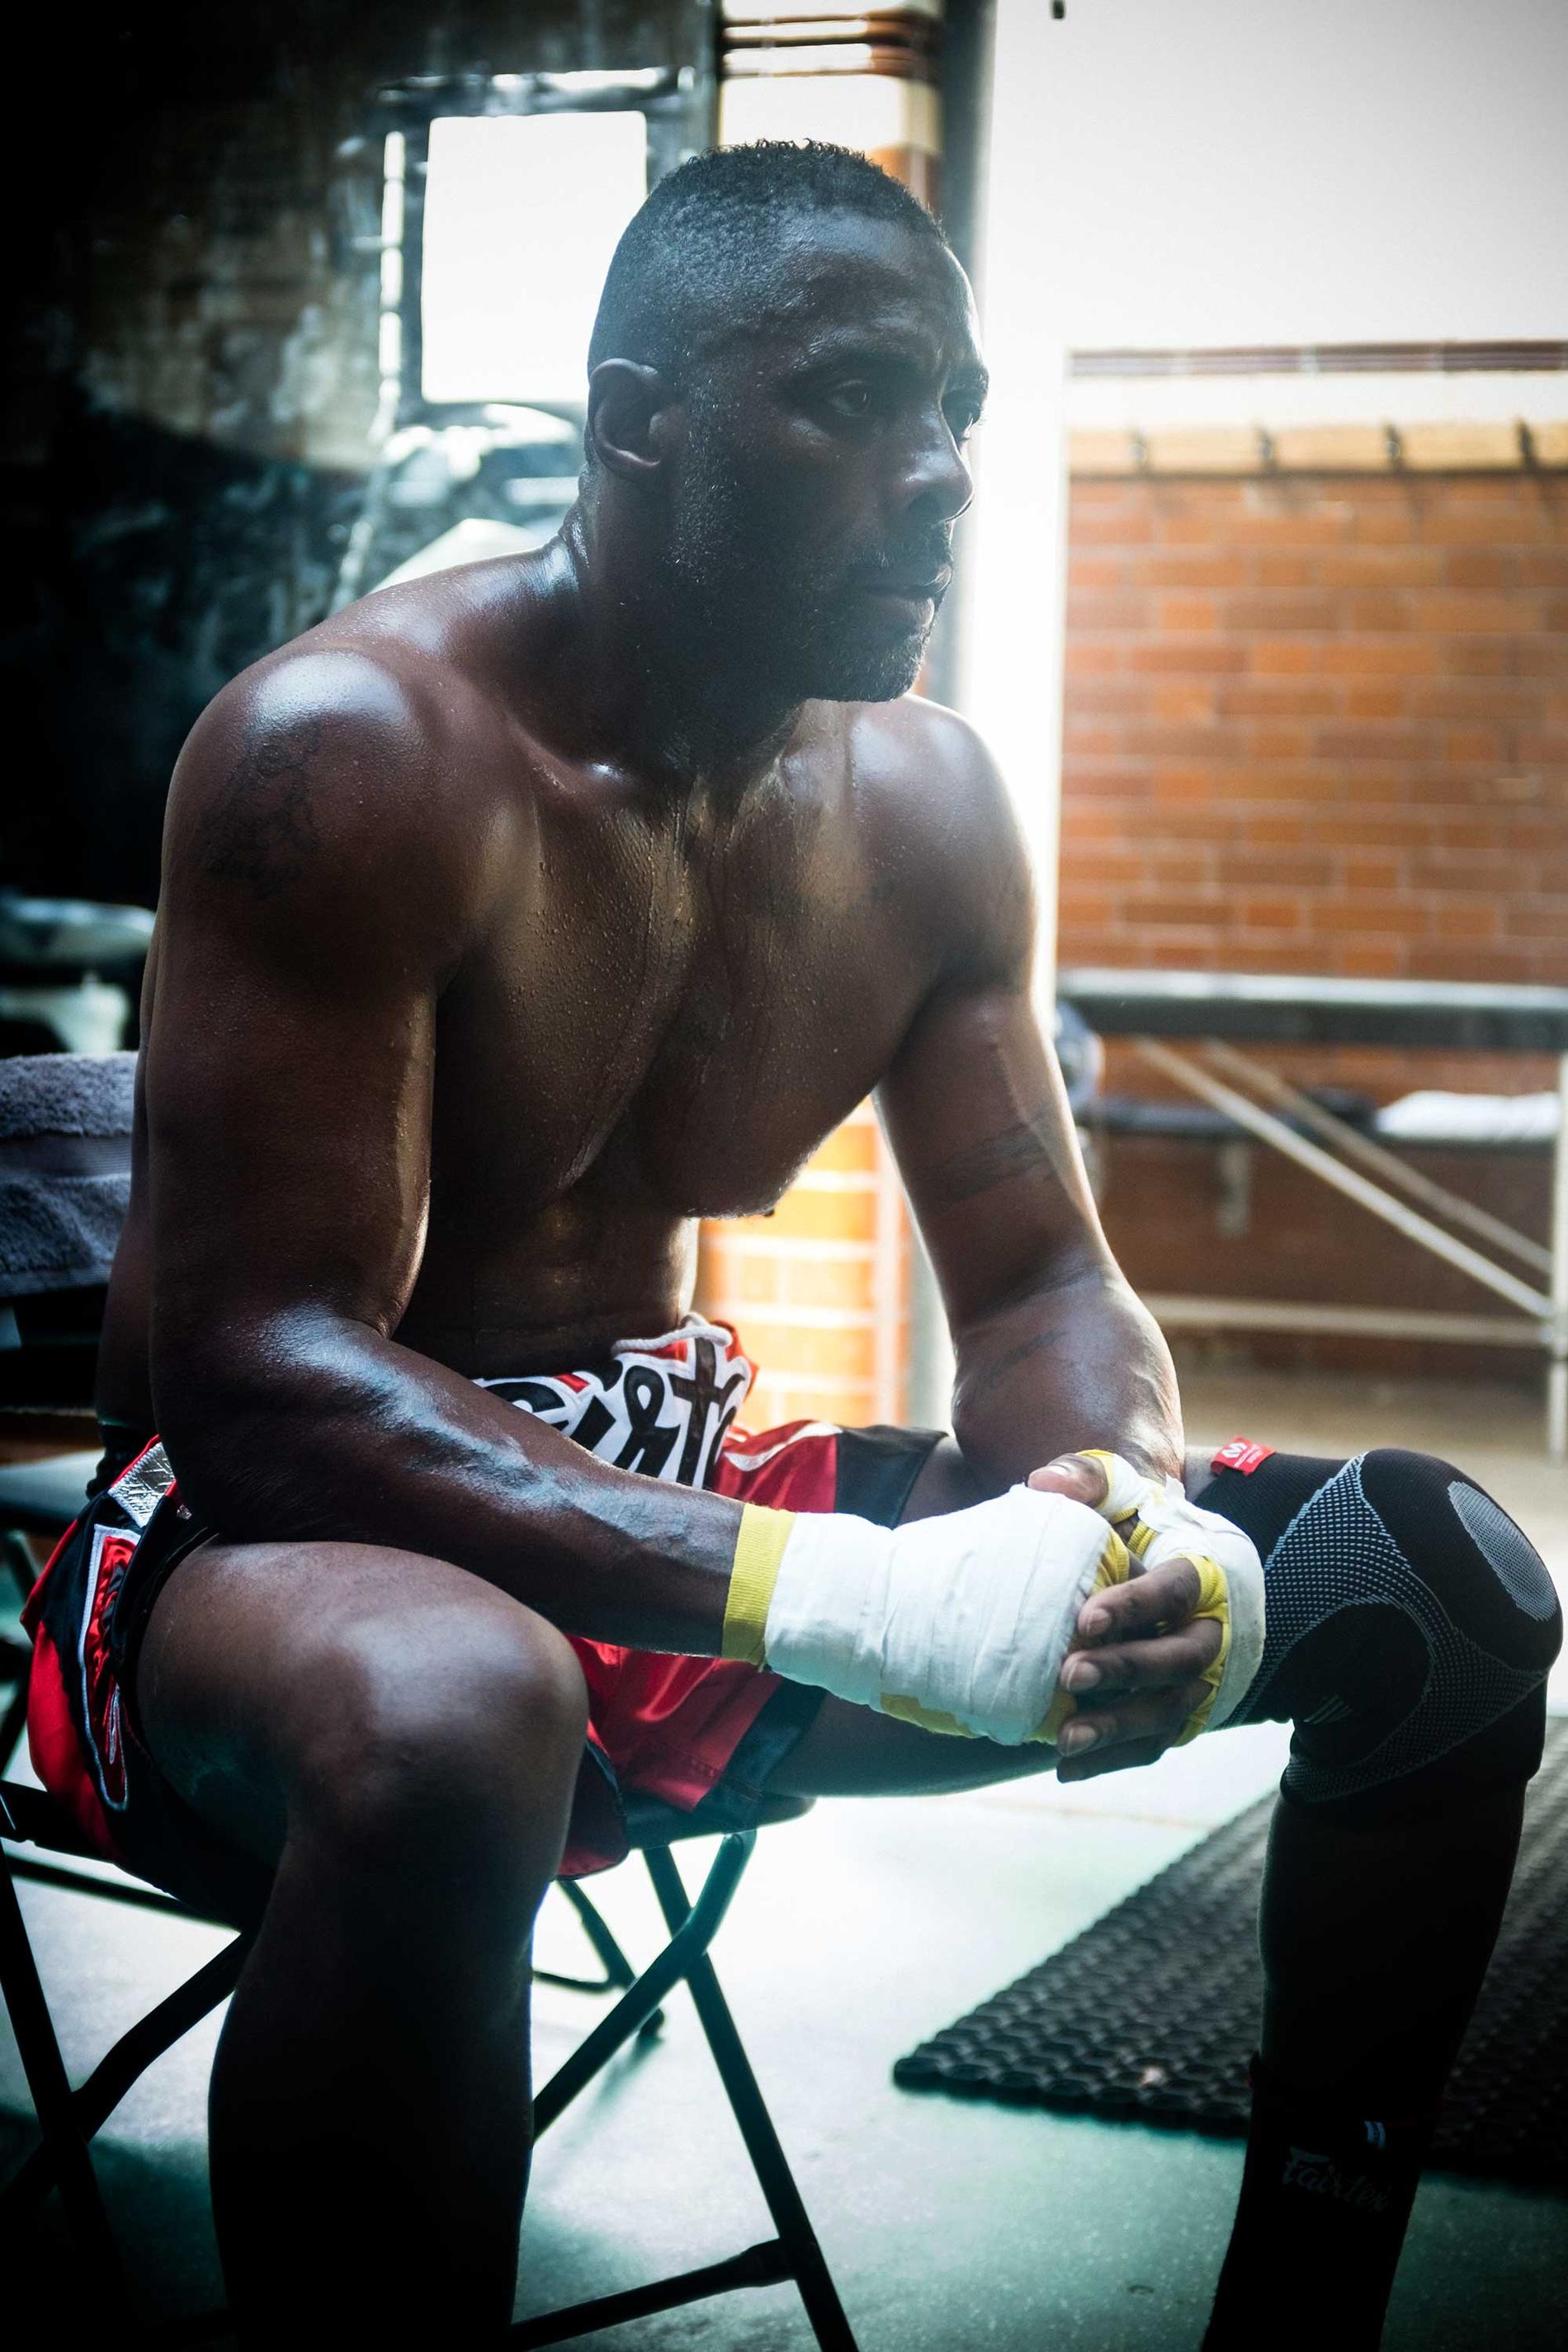 Ur ”Idris Elba: fighter”.